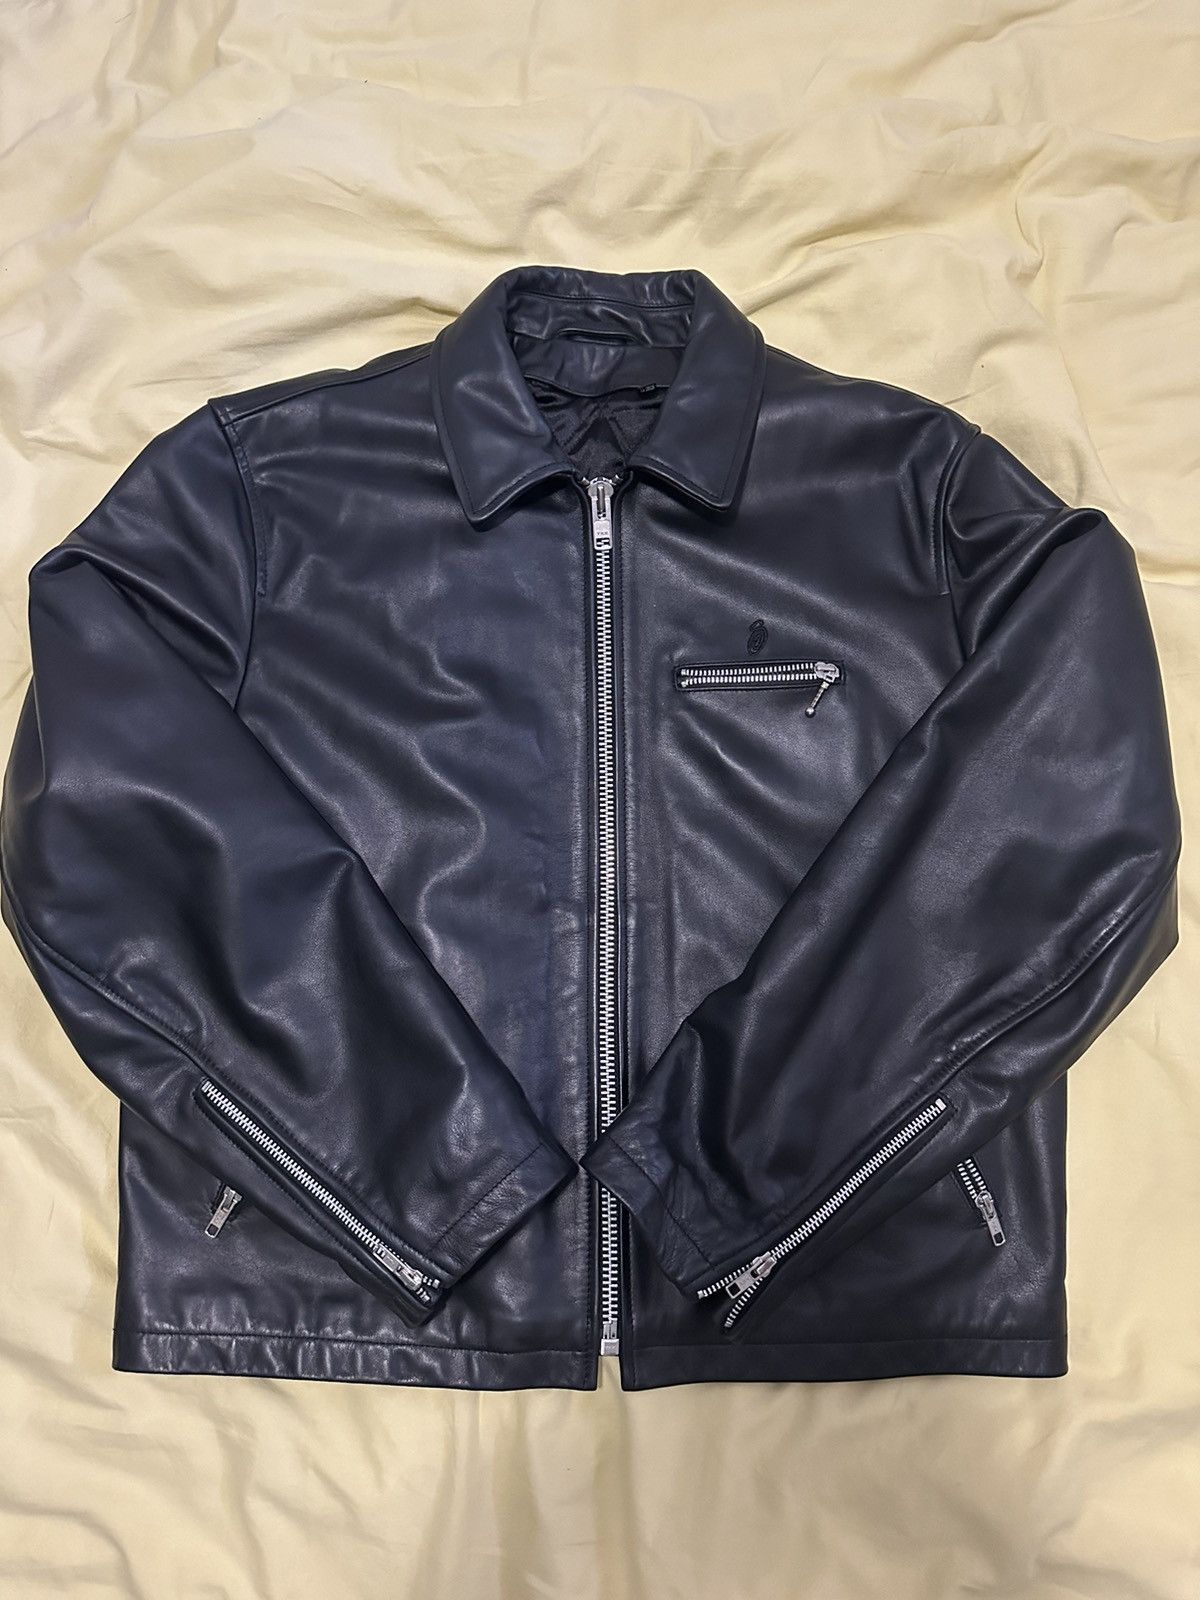 Leather Bing Jacket Stussy | Grailed